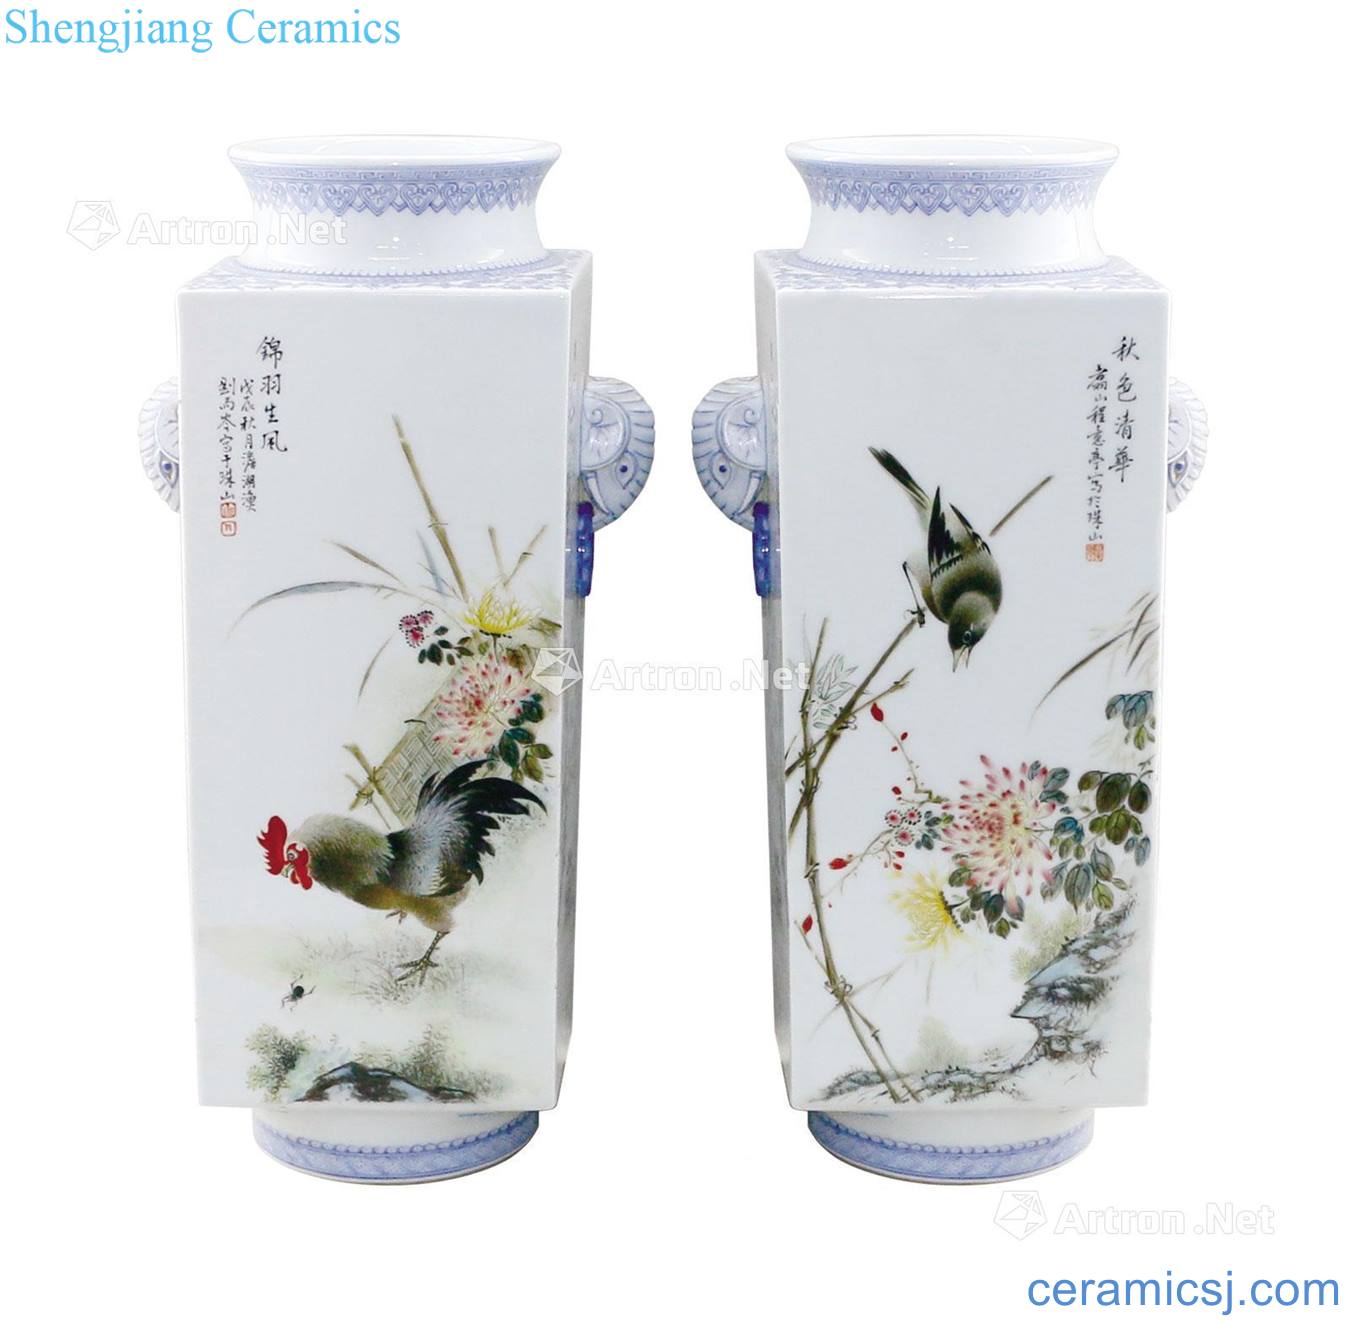 Scenery character flower-and-bird grain square bottles